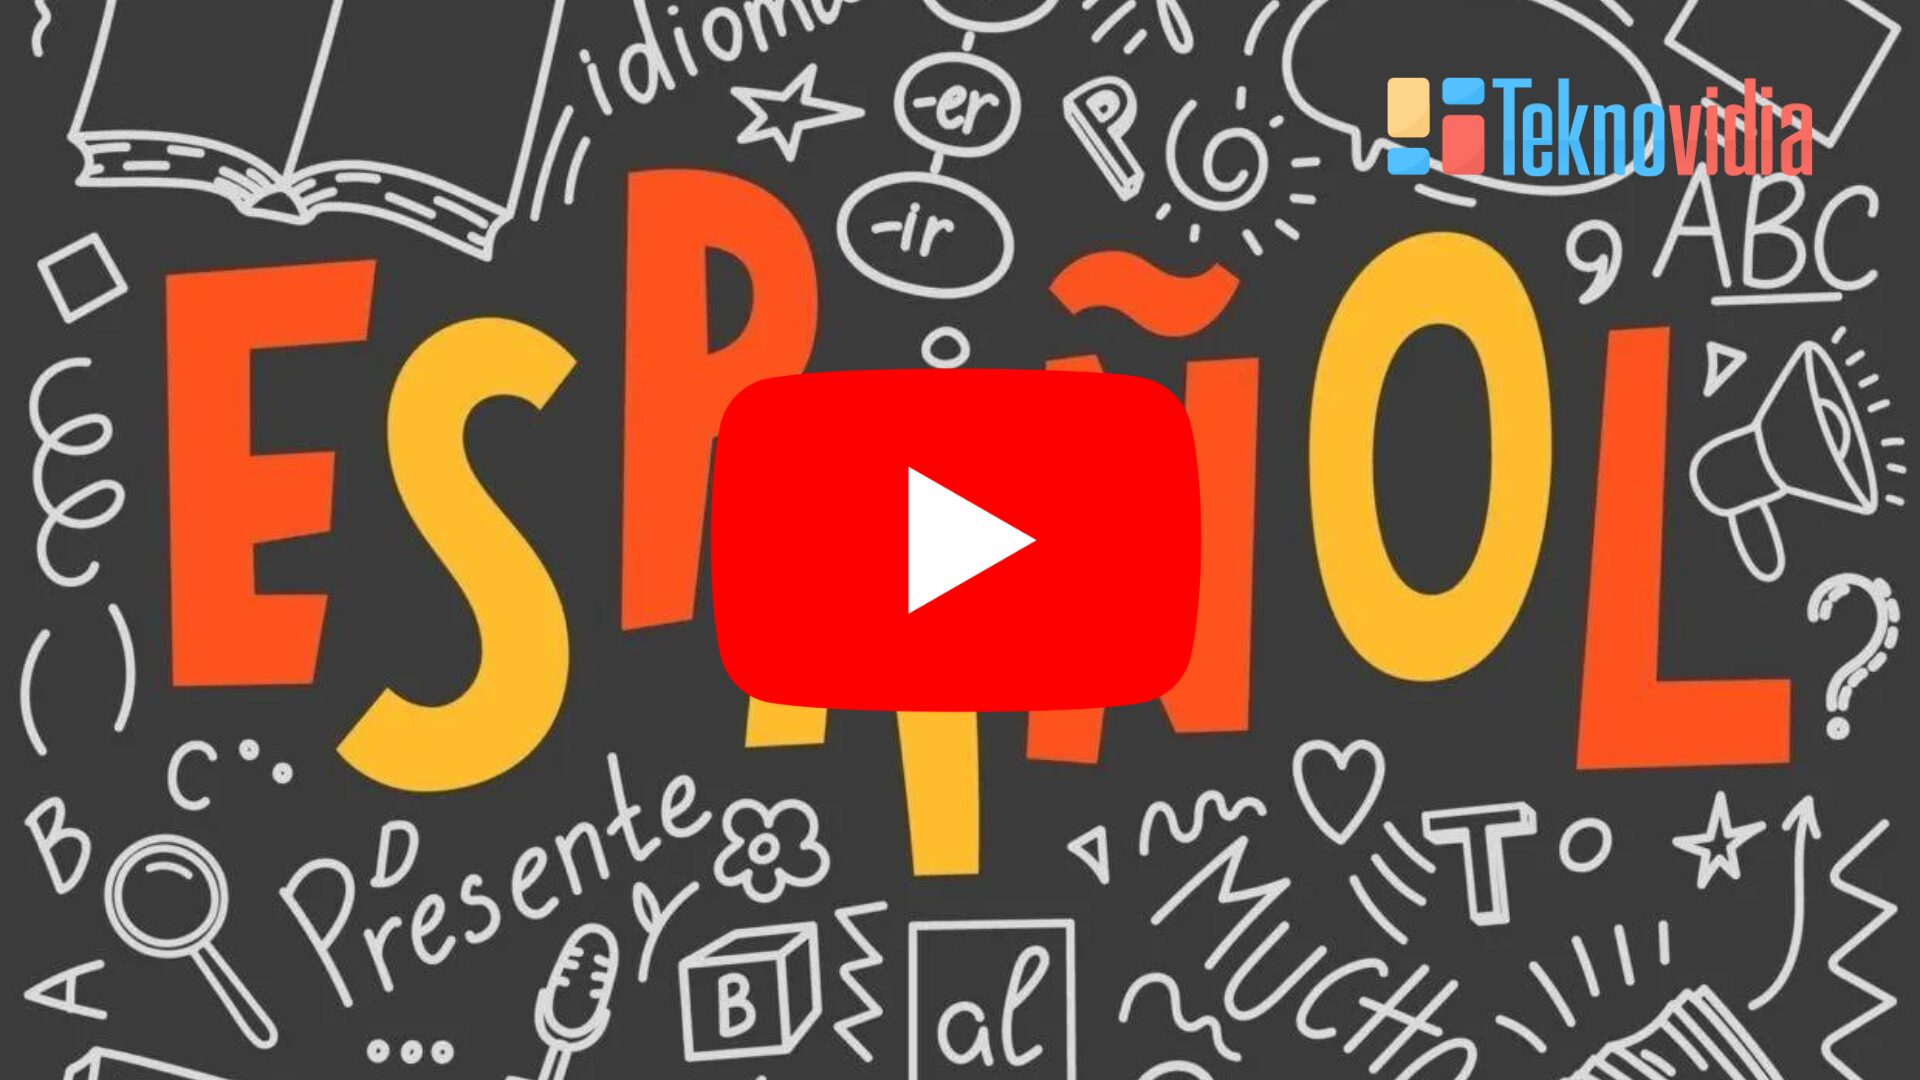 channel youtube untuk belajar bahasa spanyol